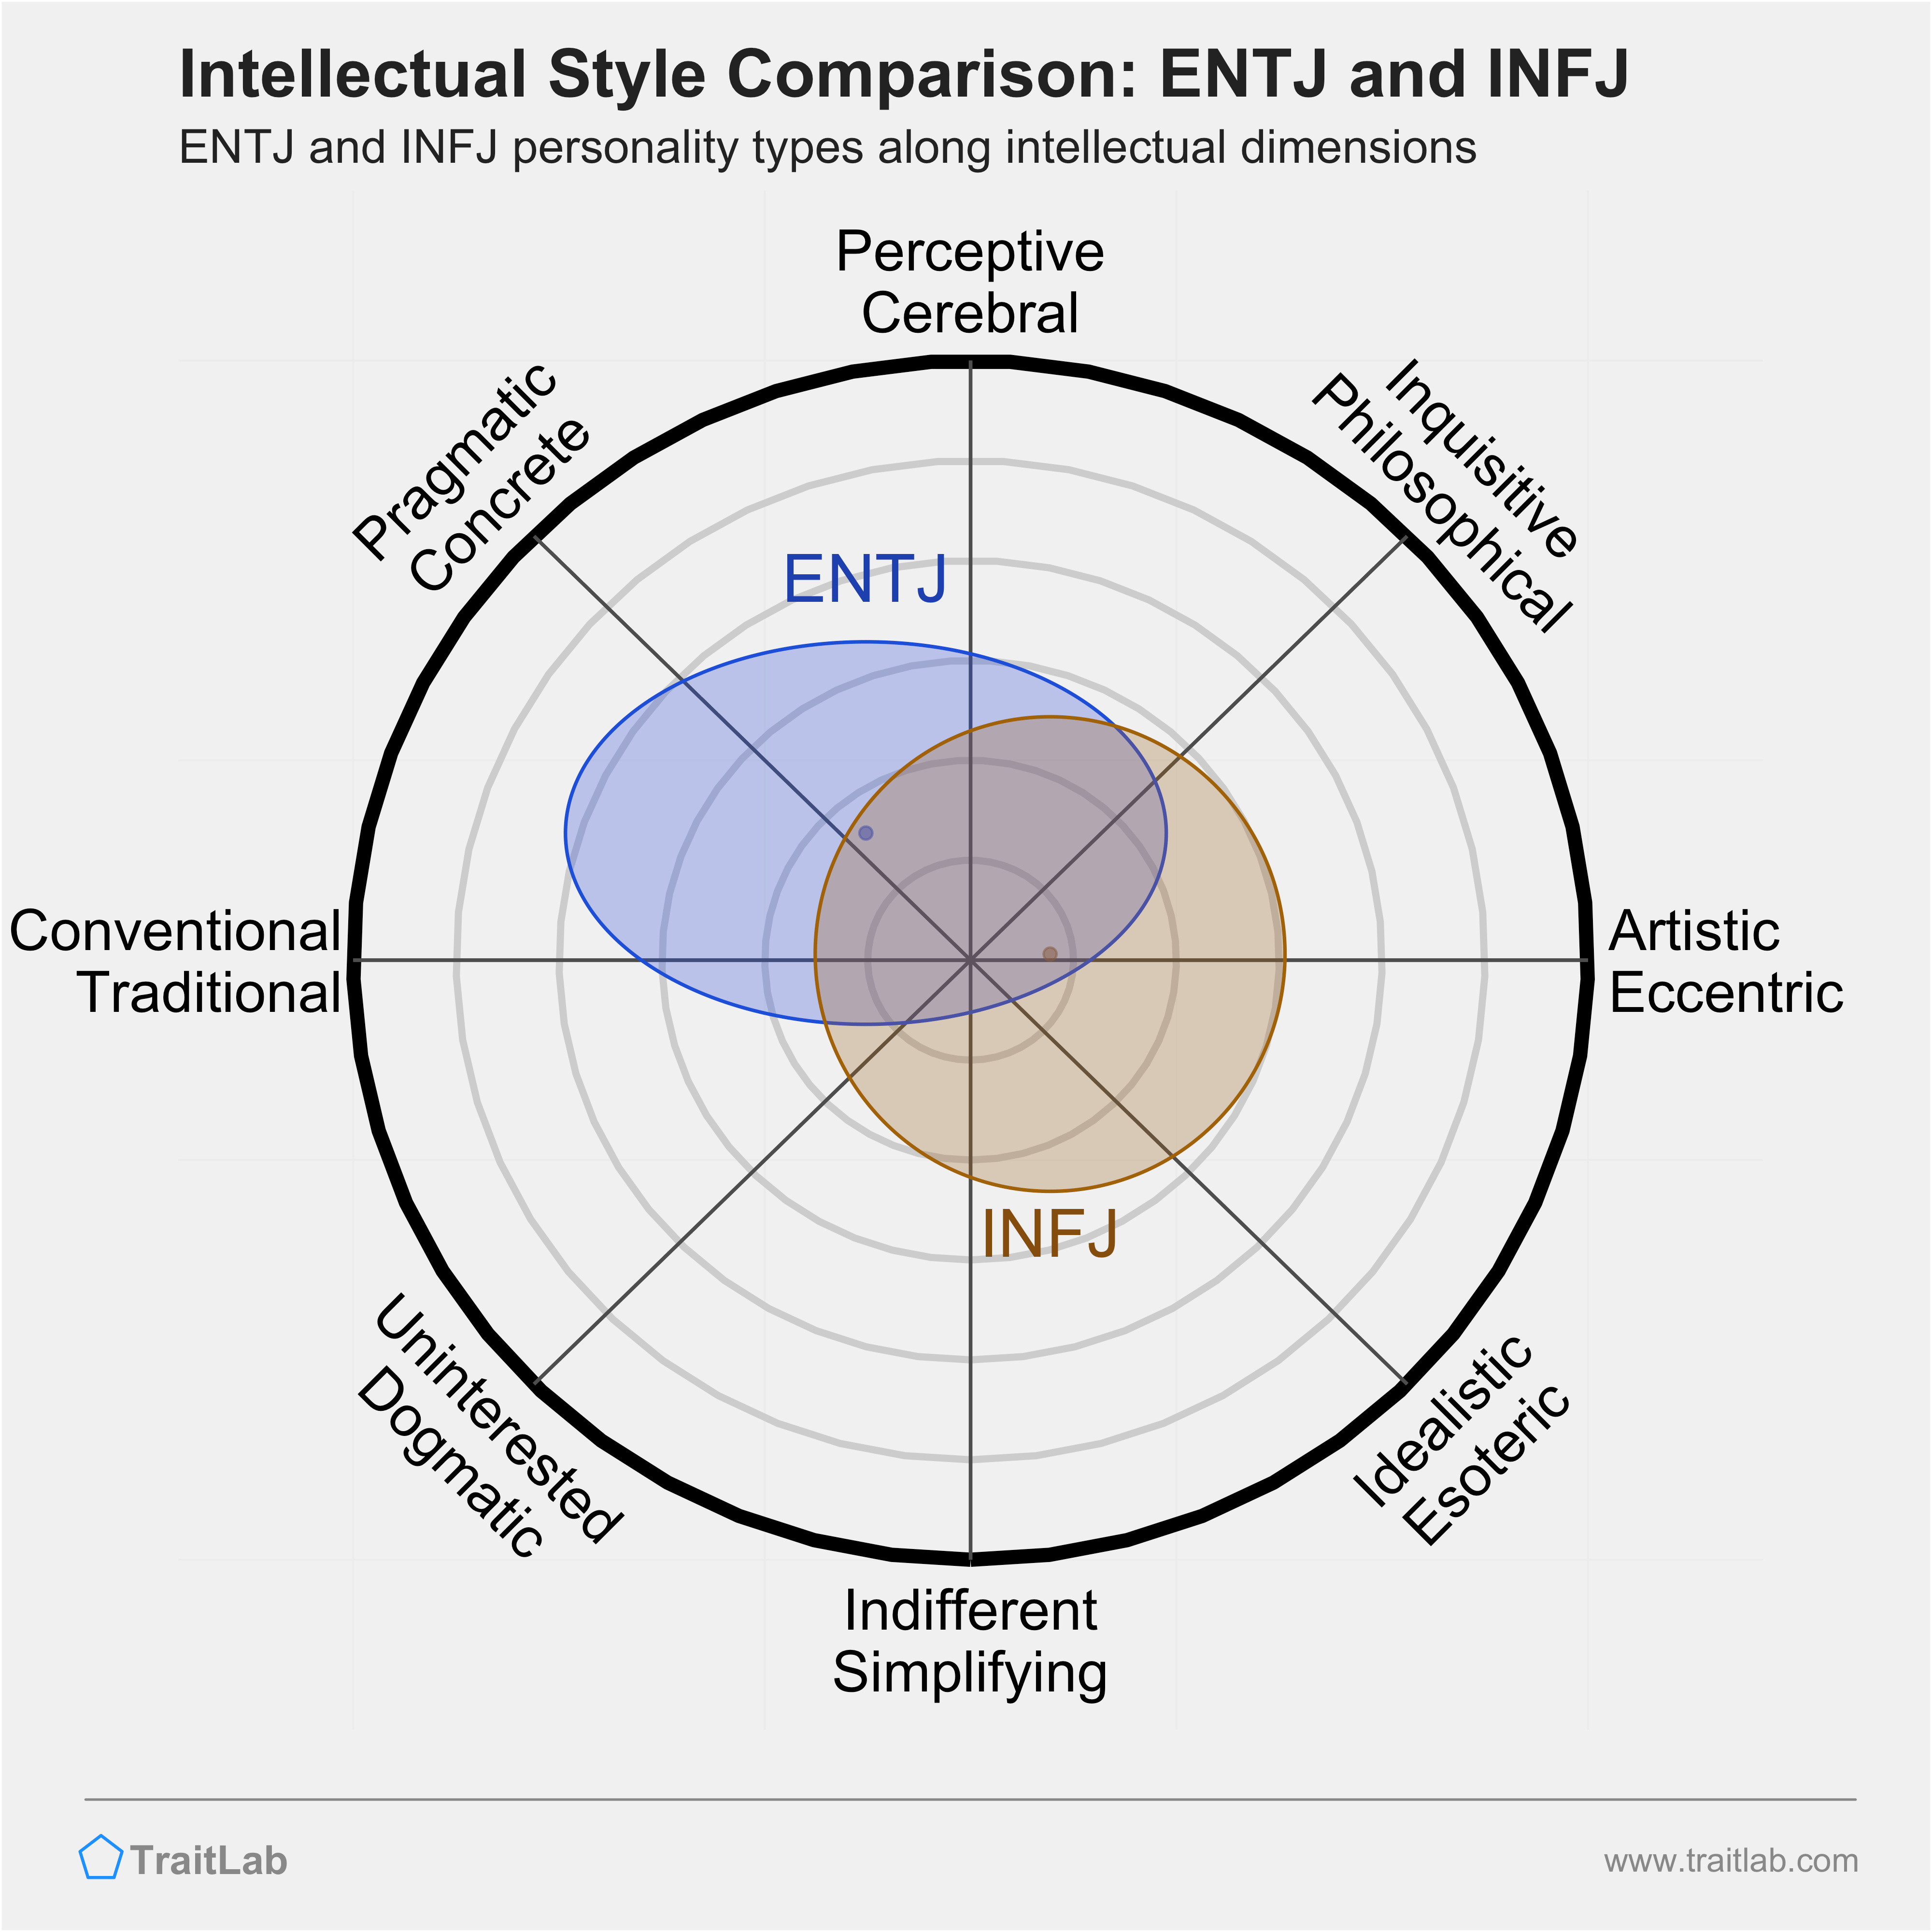 ENTJ and INFJ comparison across intellectual dimensions